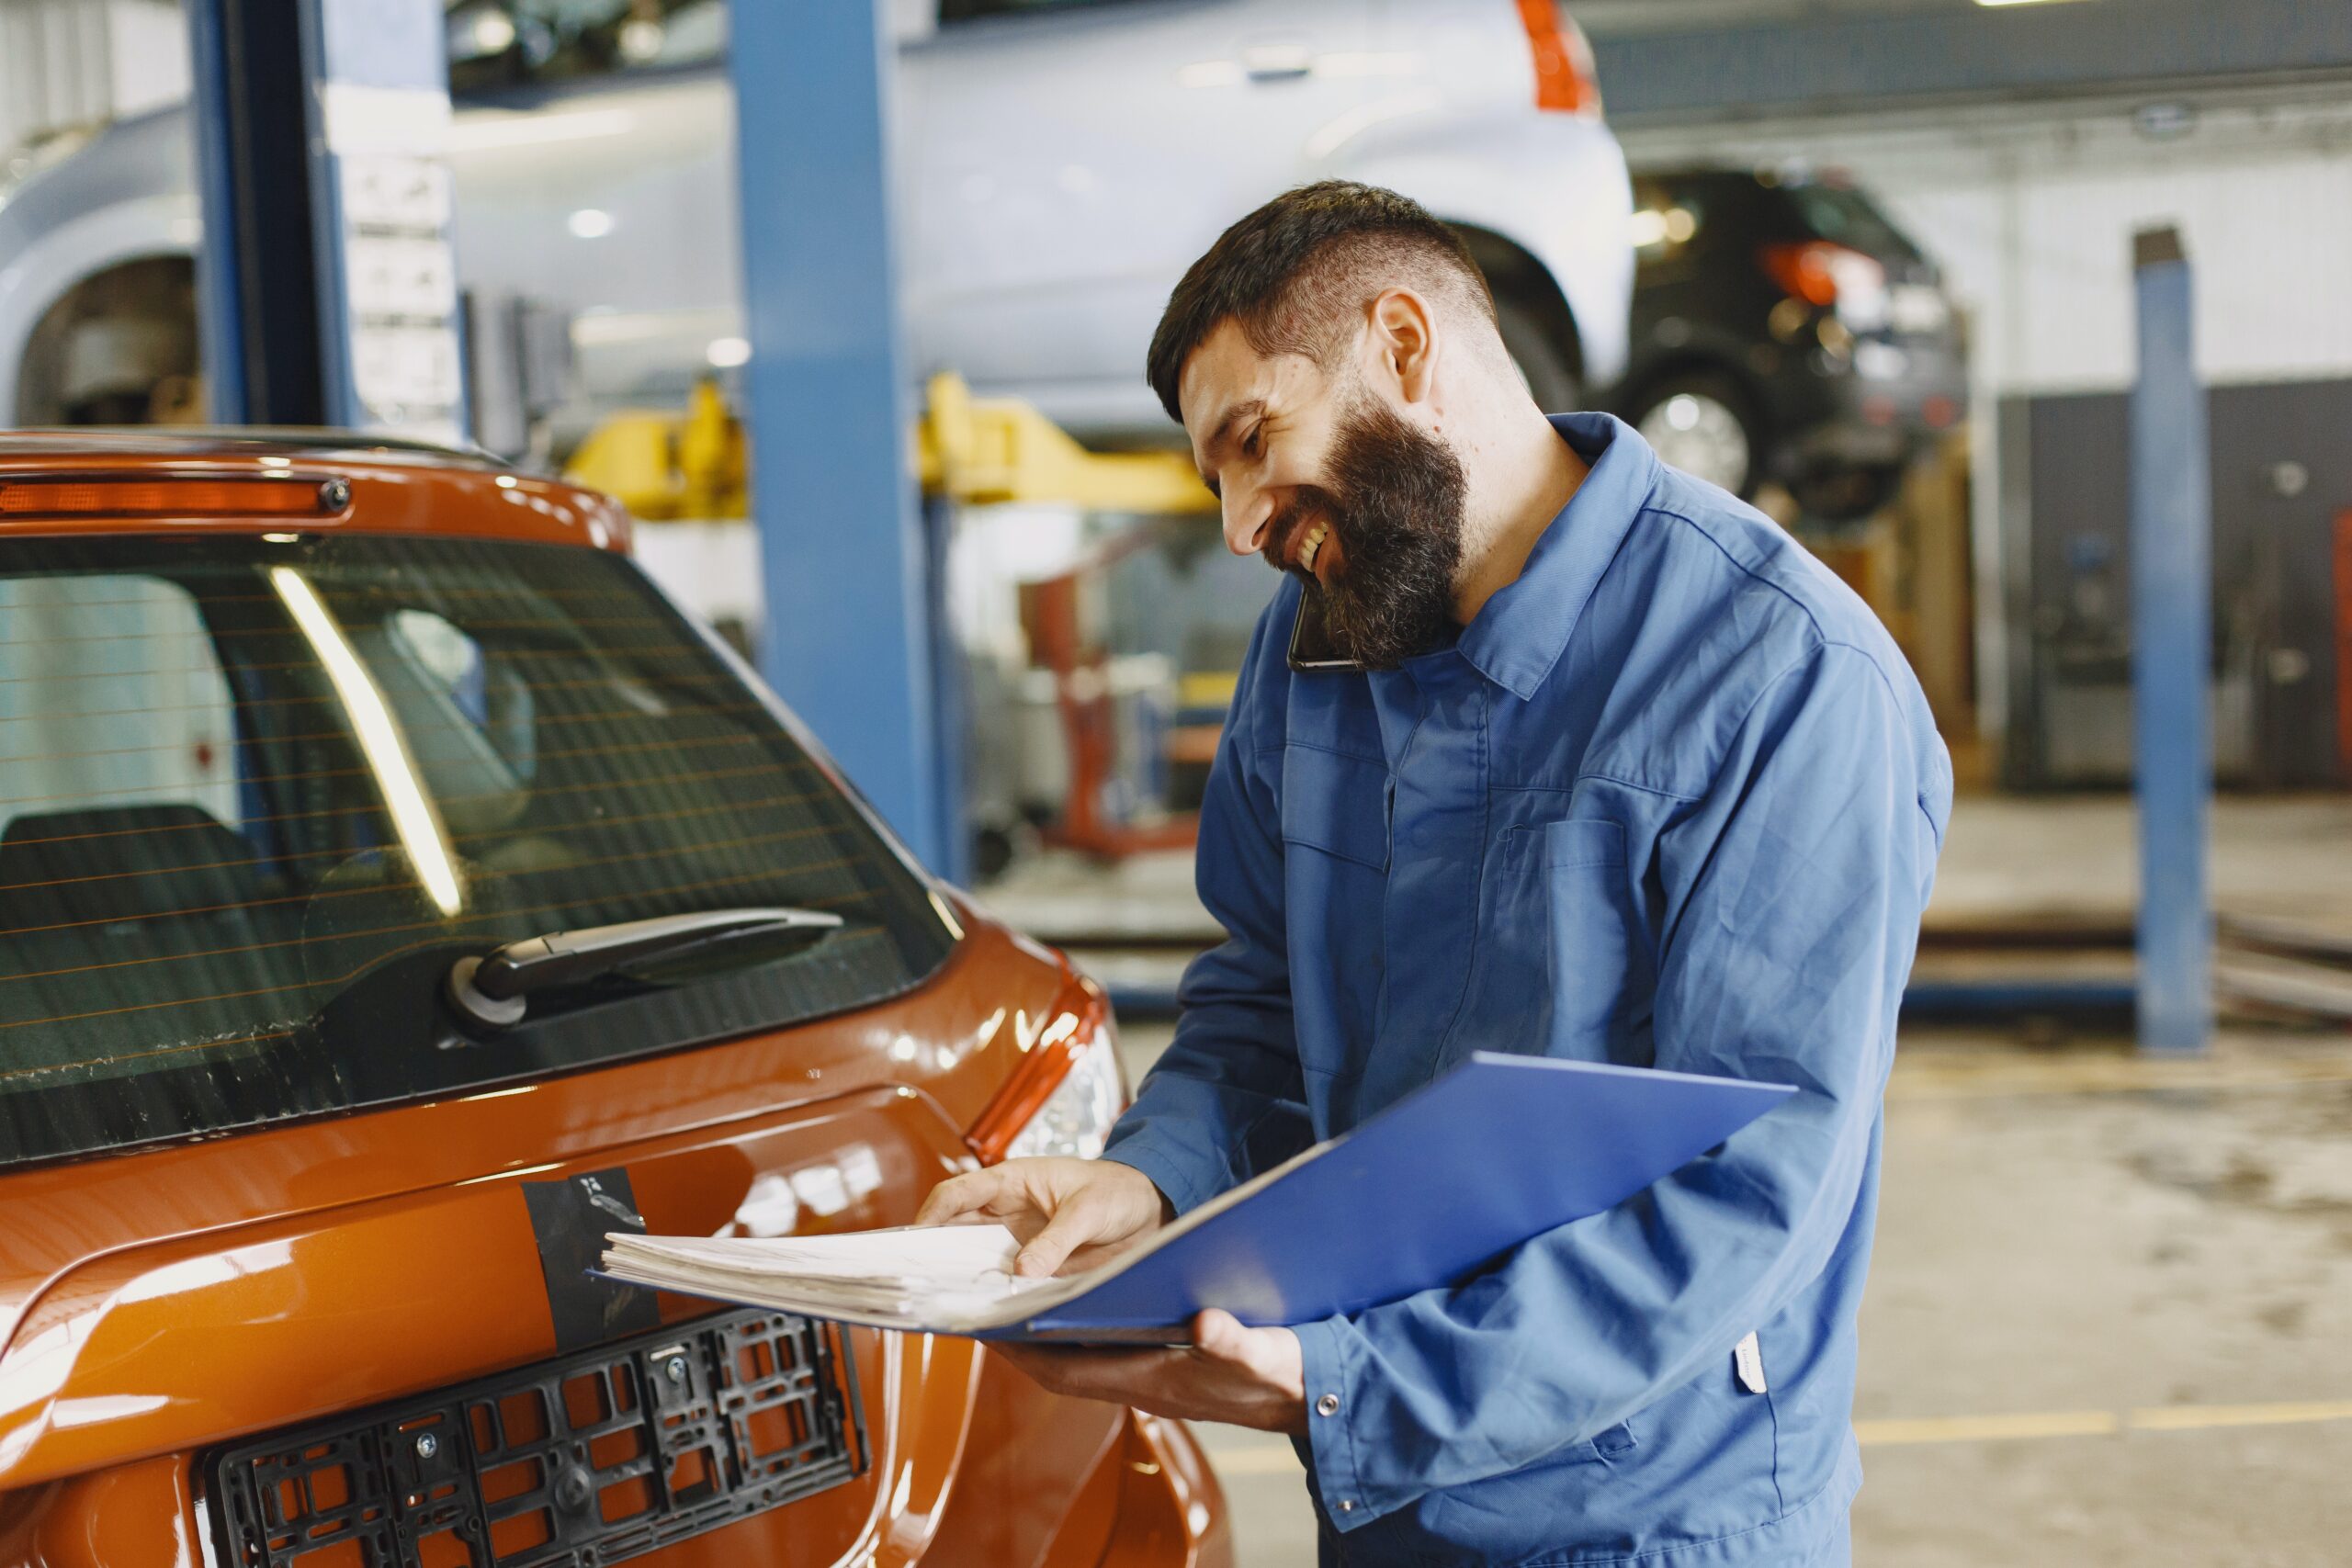 Auto Repair Shop Leader Show Leadership qualities